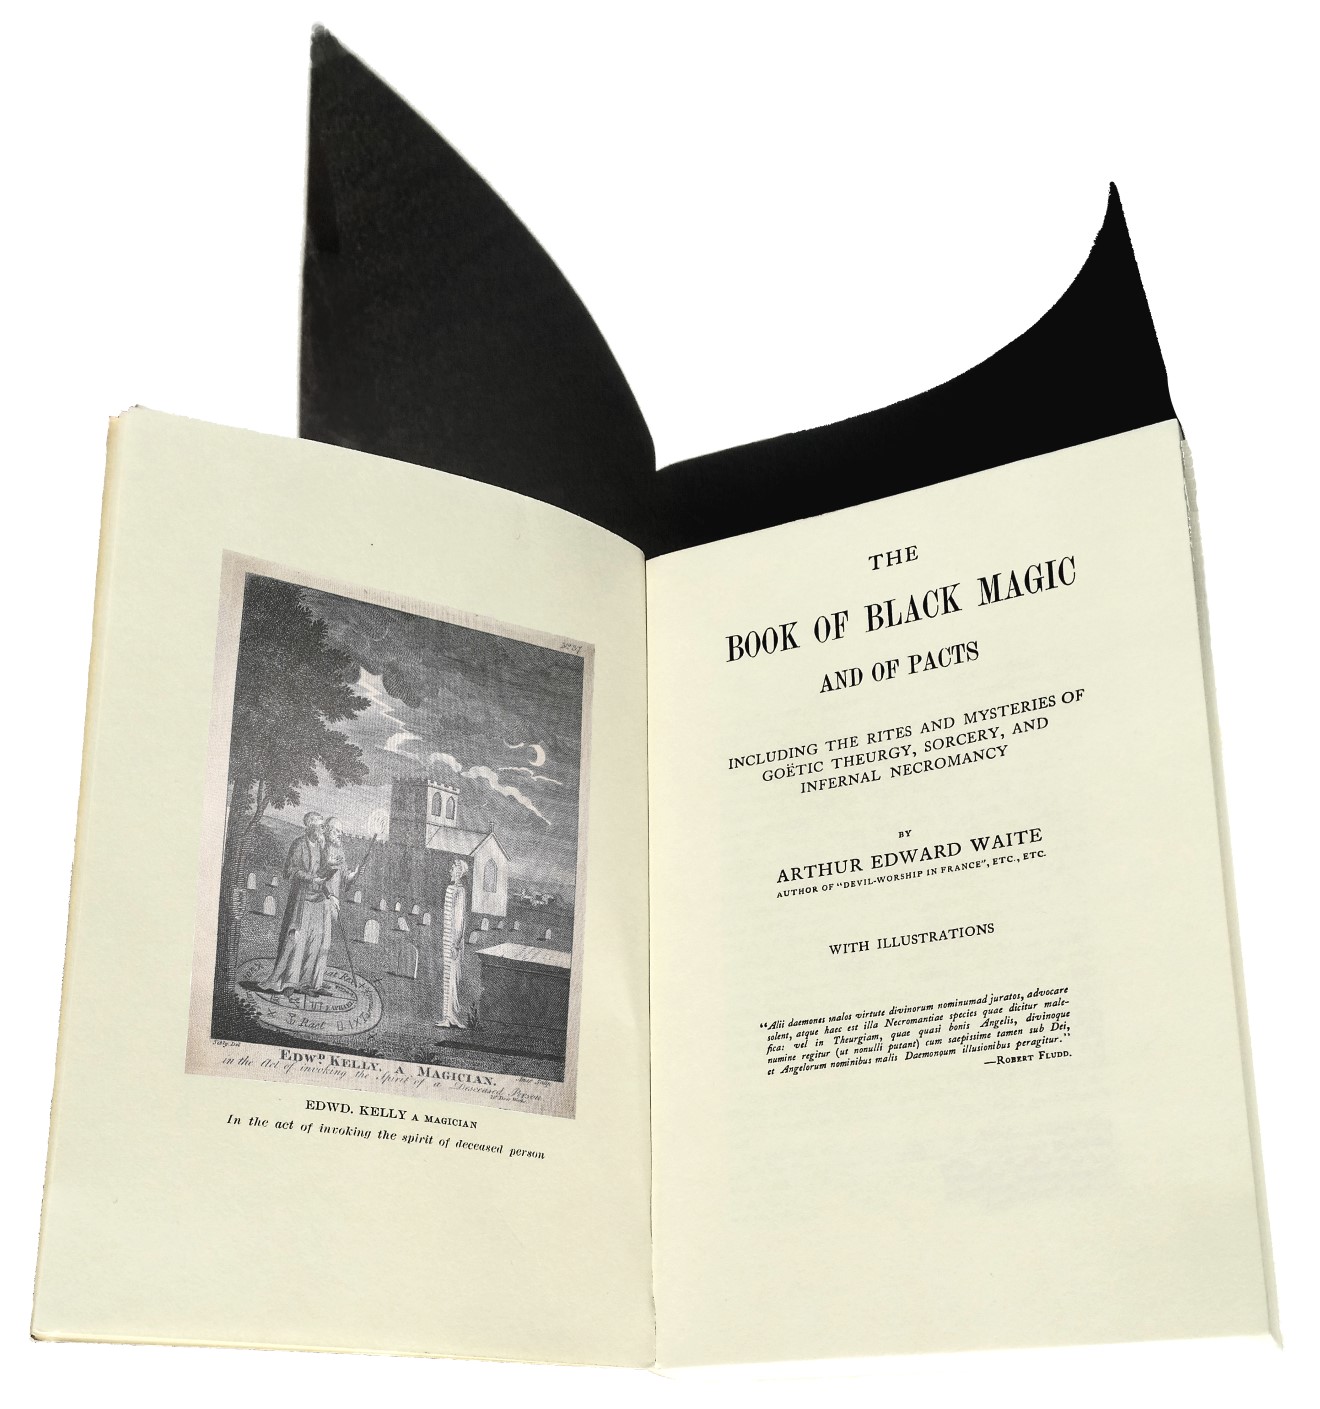 Arthur Edward Waite, The Book of Black Magic, Golden Dawn, Societas Rosicruciana in Anglia, Tarot